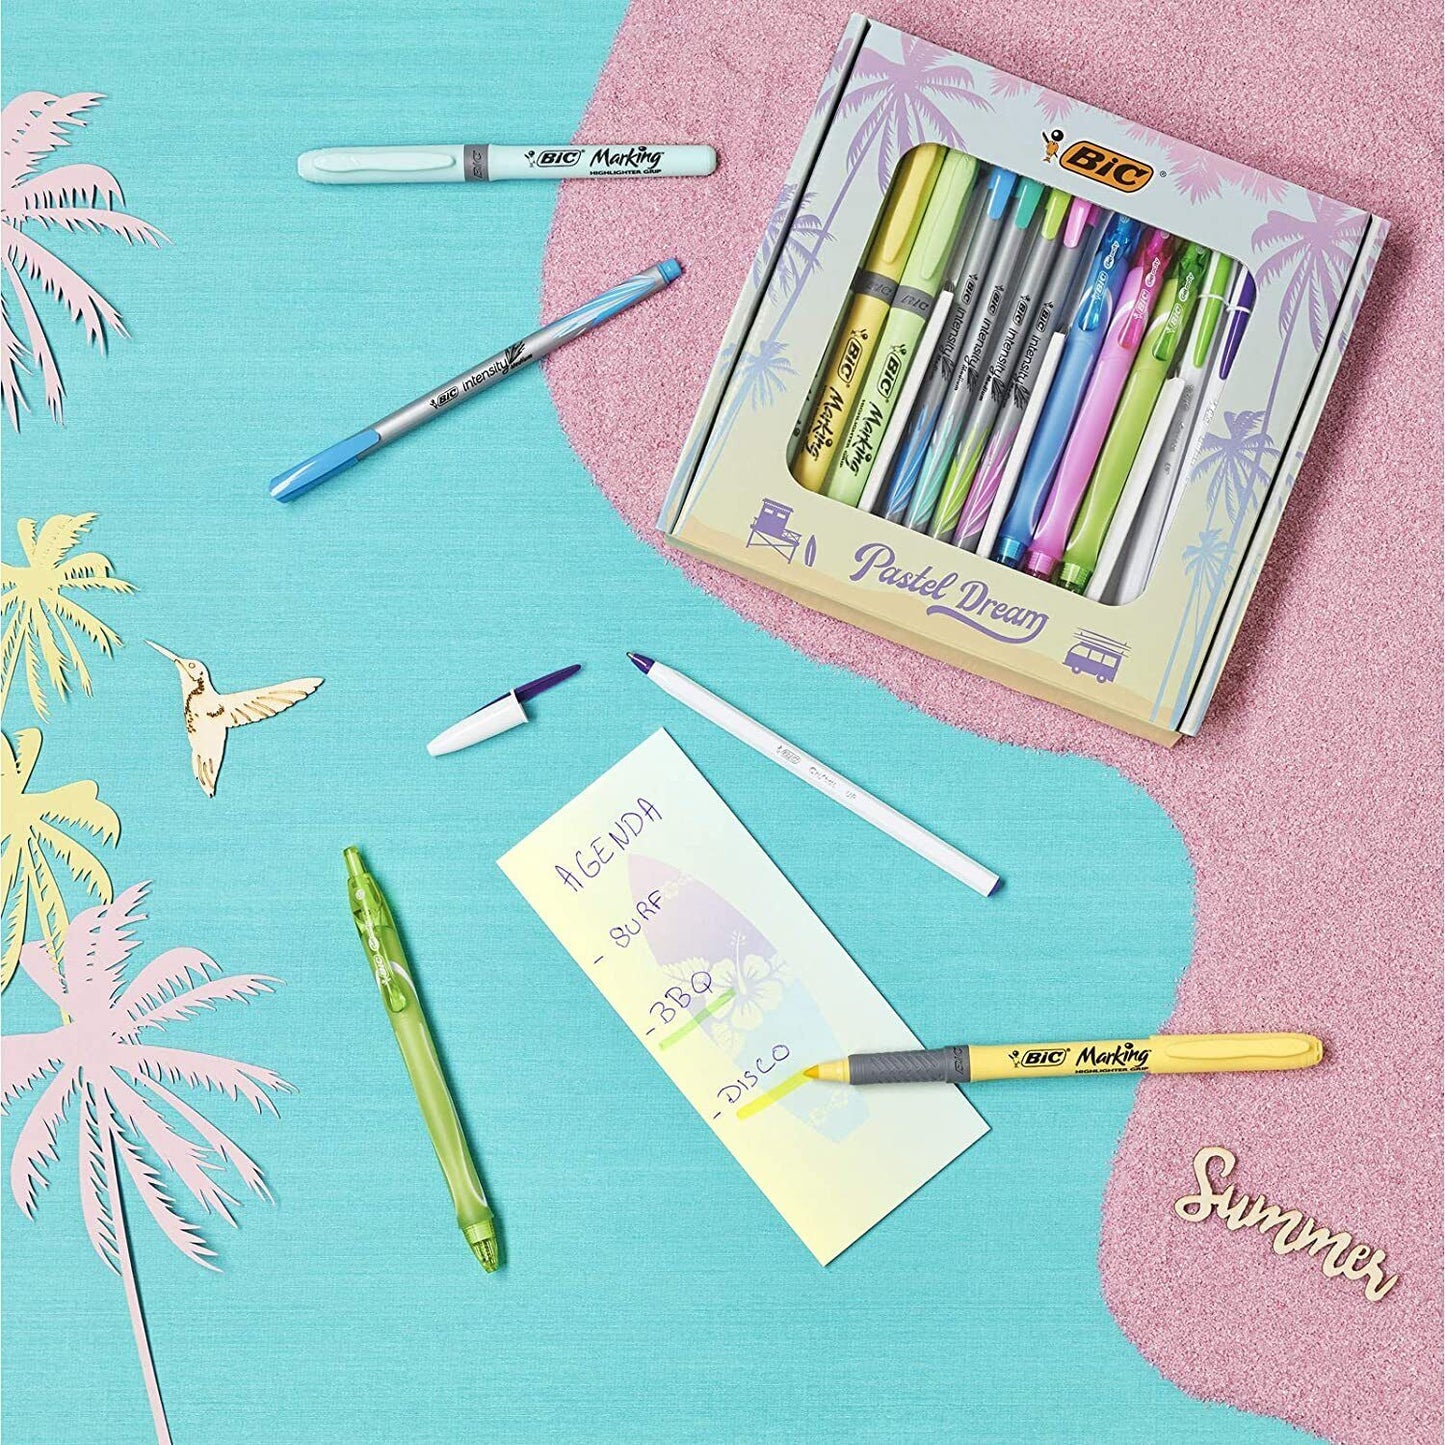 BIC Pastel Dream Kit, 16 accessori penne, pennarelli, evidenziatori